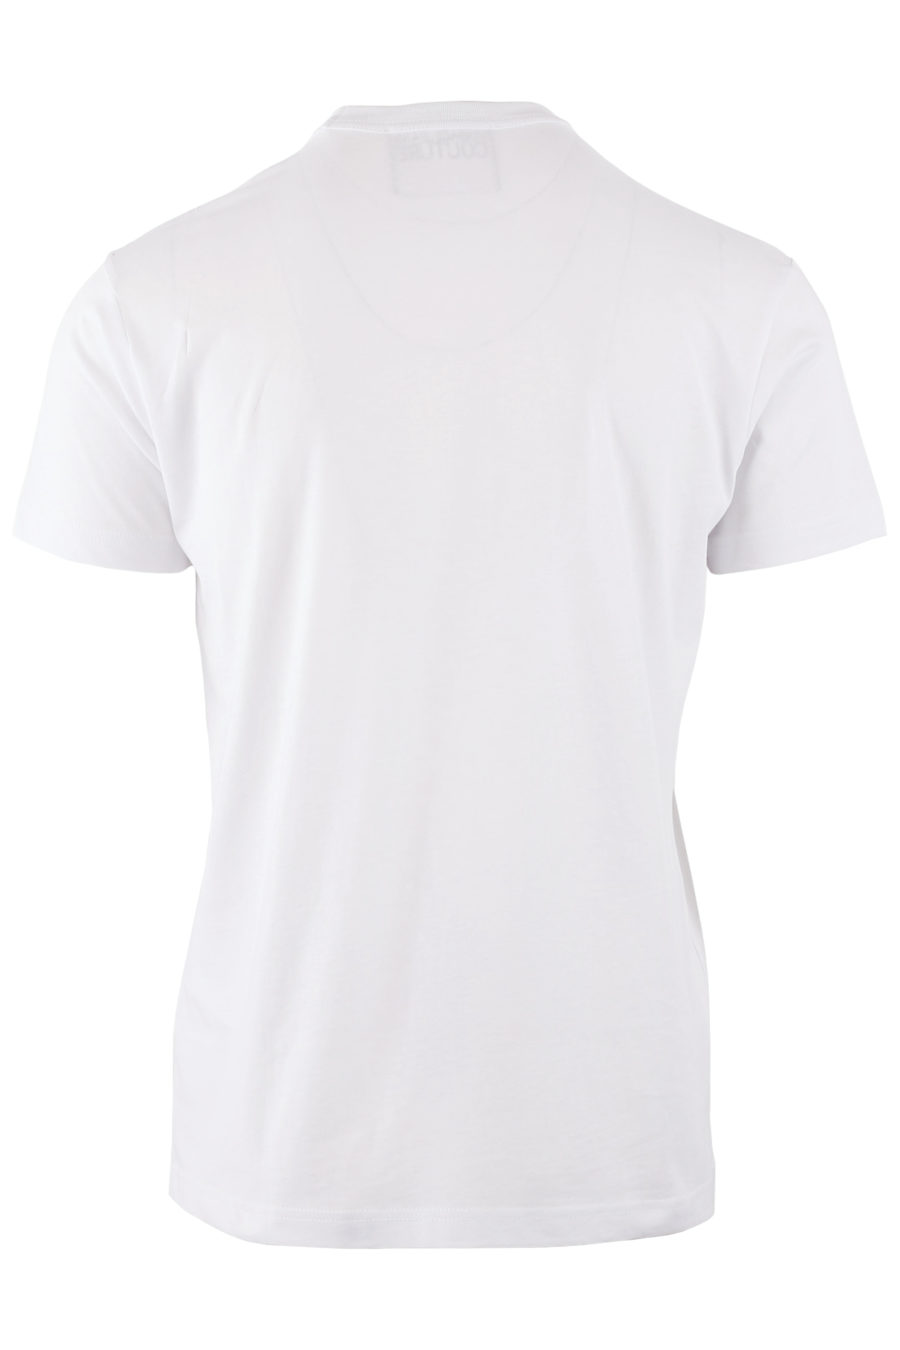 Weißes T-Shirt mit großem Logo schwarz - ffd9189bc4df2c18229d866379b9b0a094071dfd